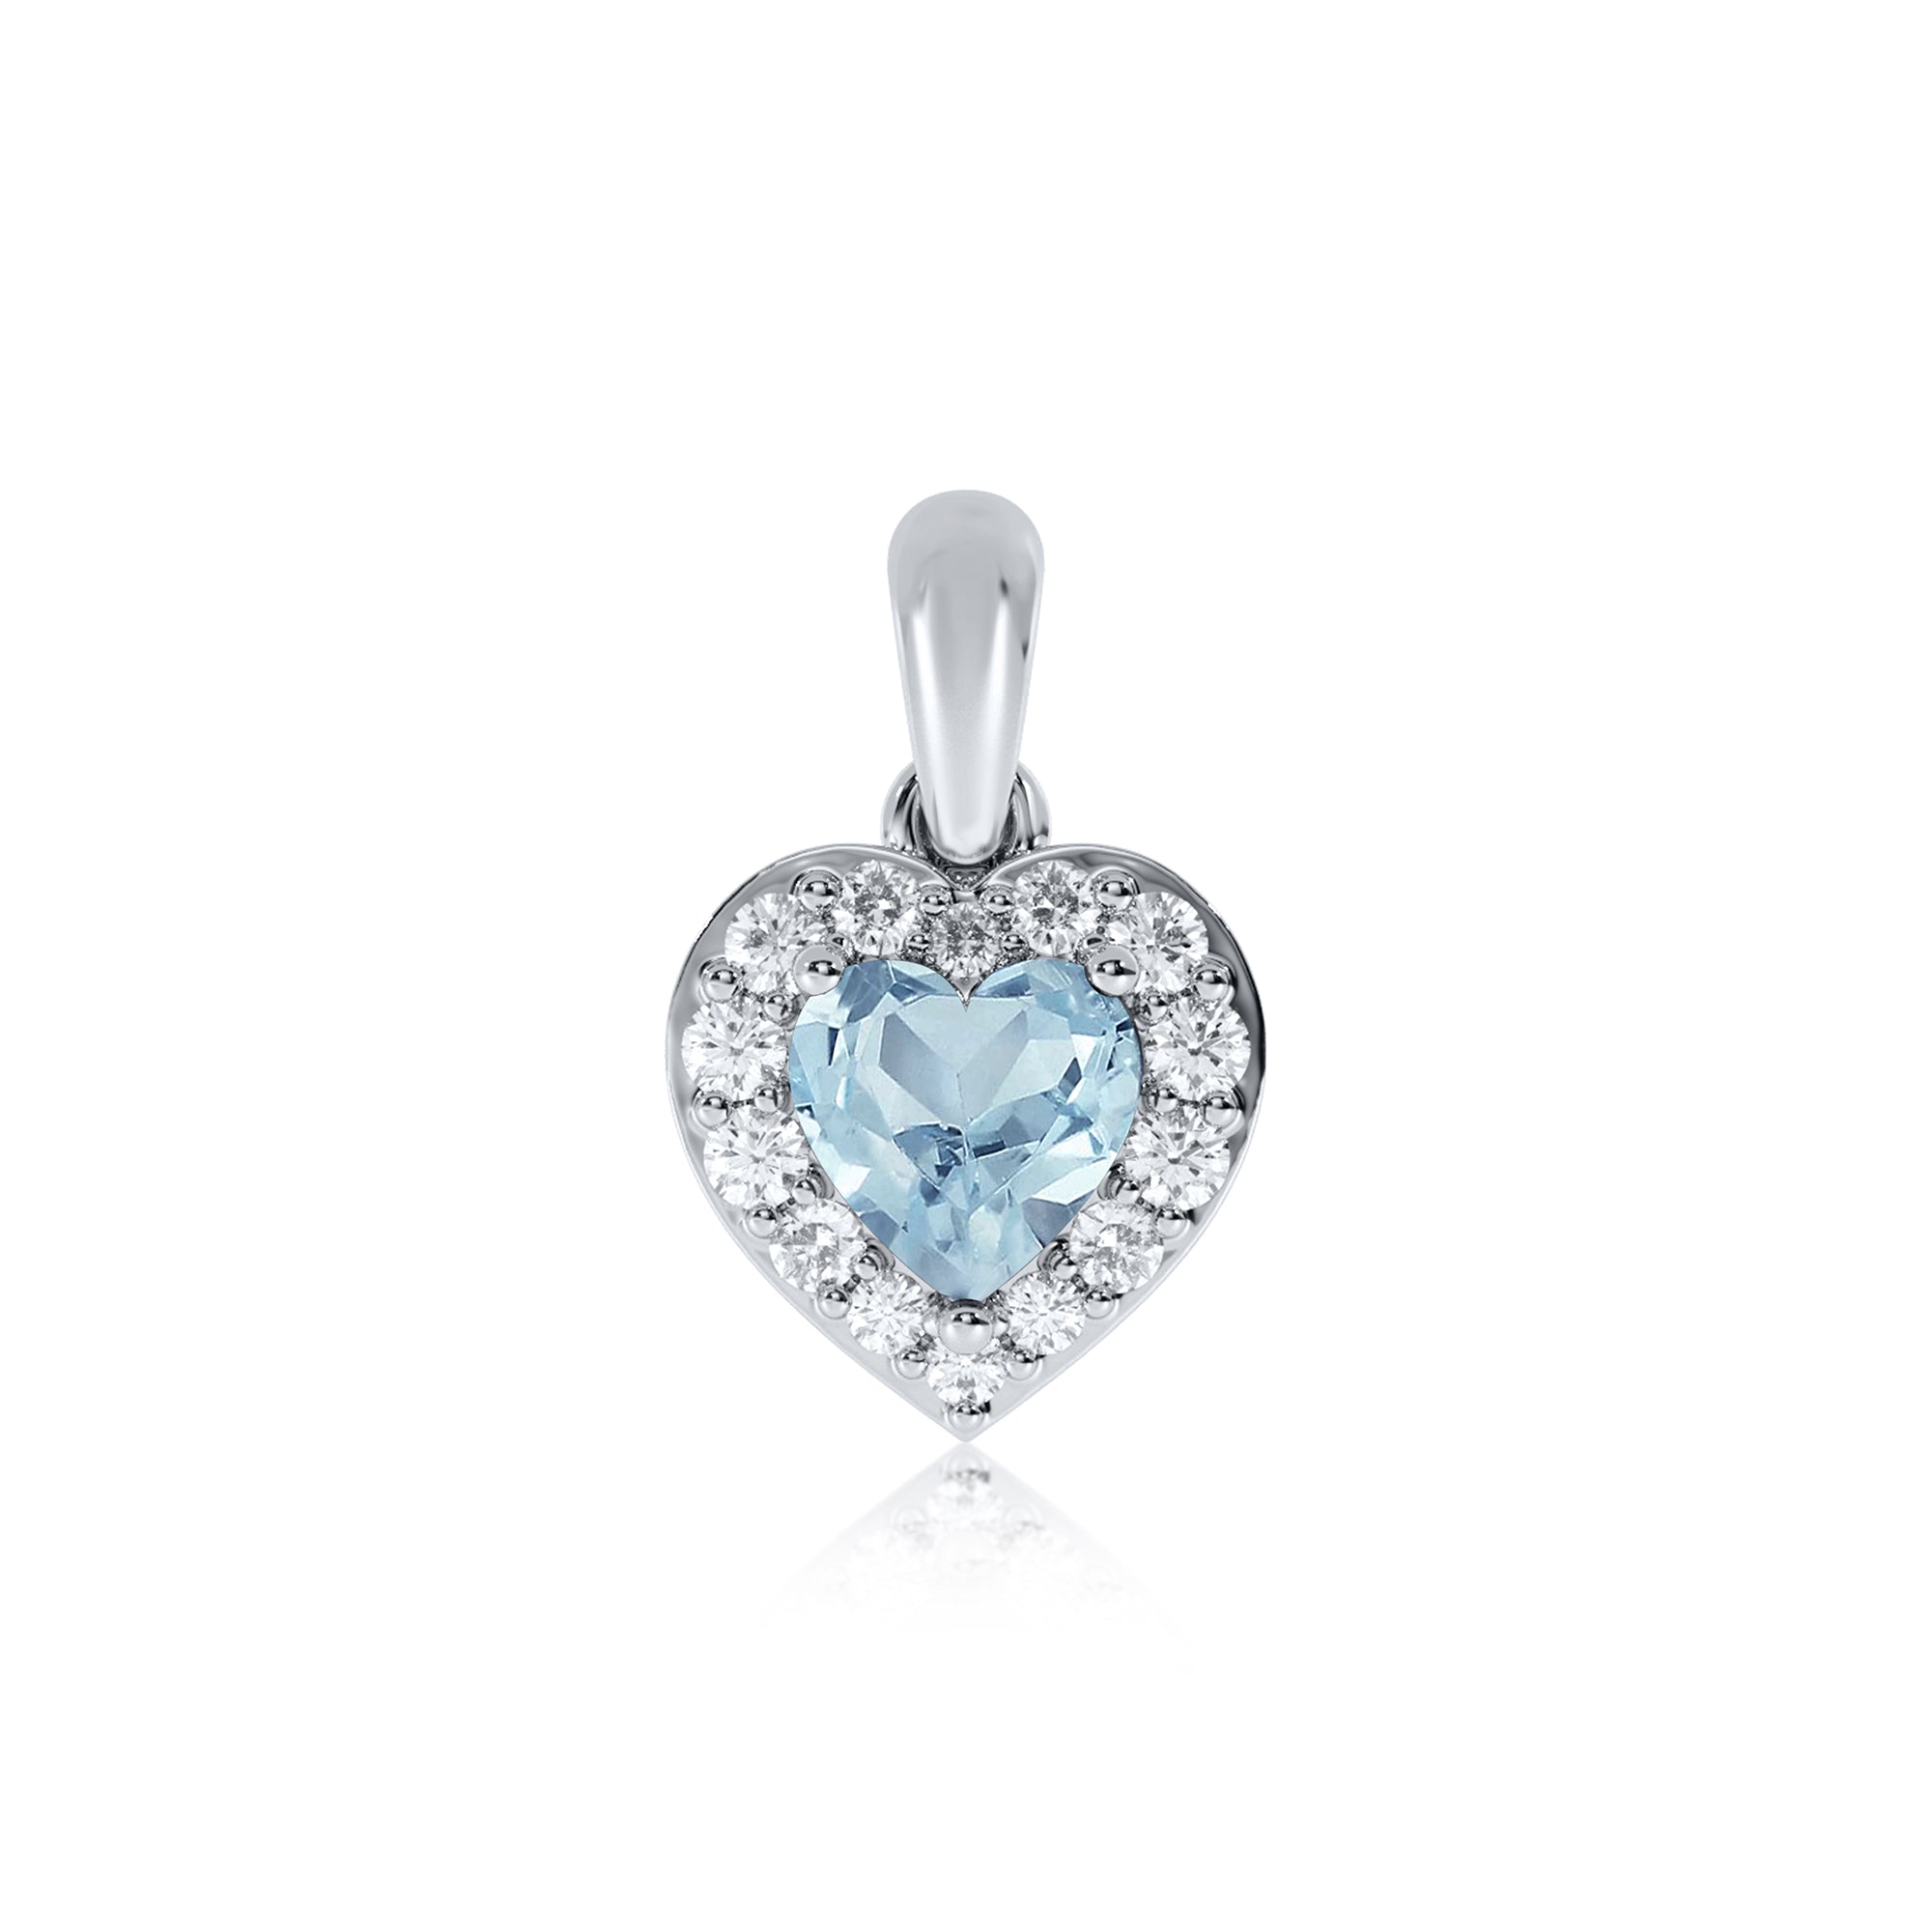 9ct white gold 5mm heart shape aquamarine & diamond cluster pendant 0.13ct